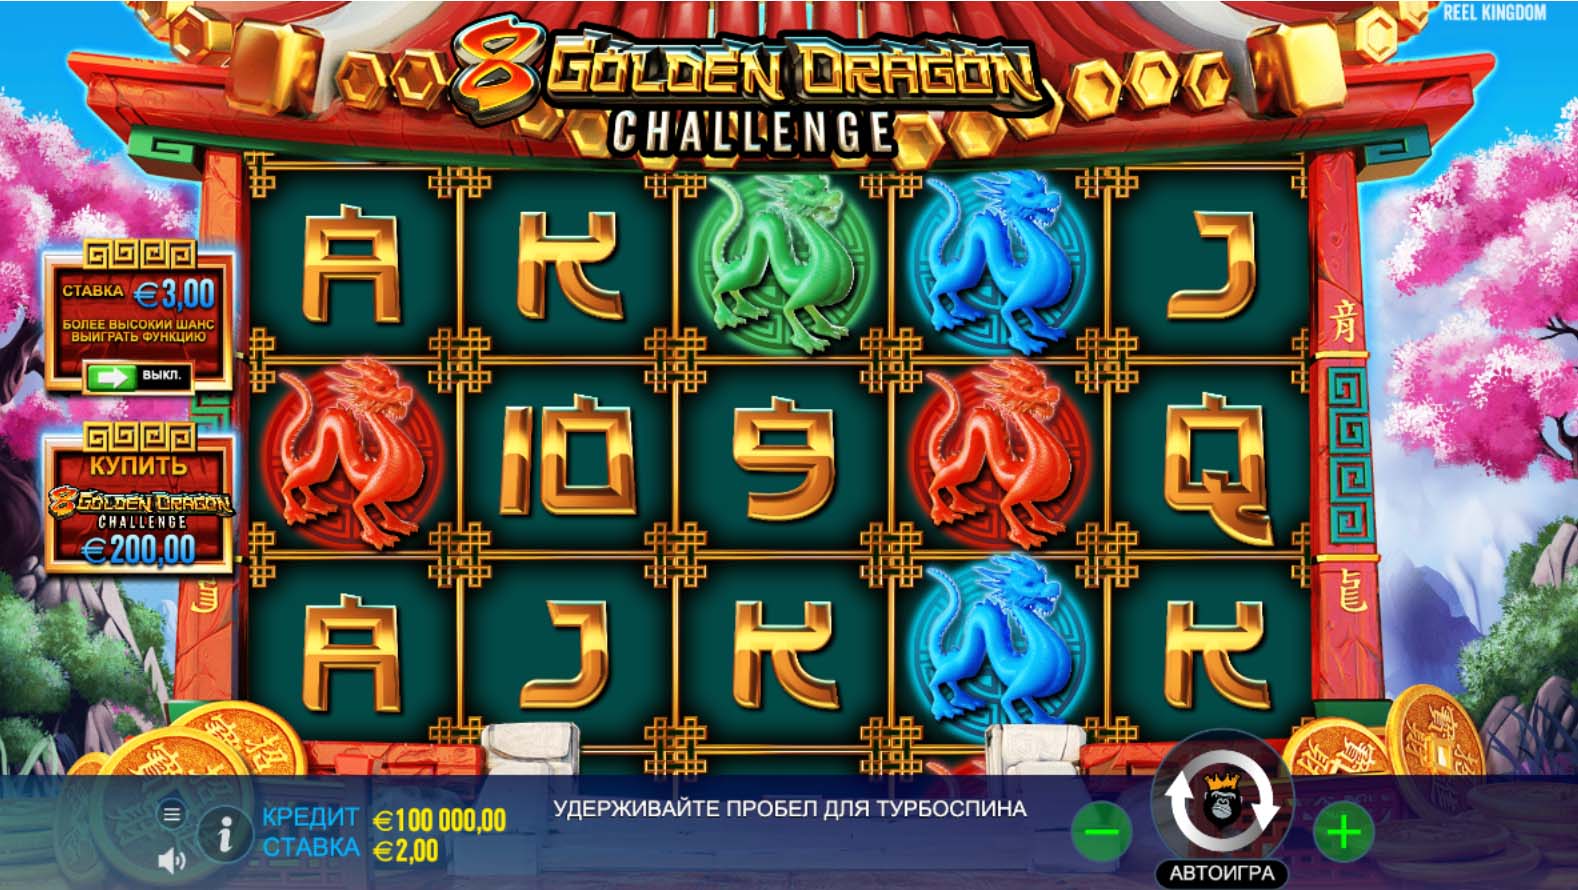 8 Golden Dragon Challenge 2